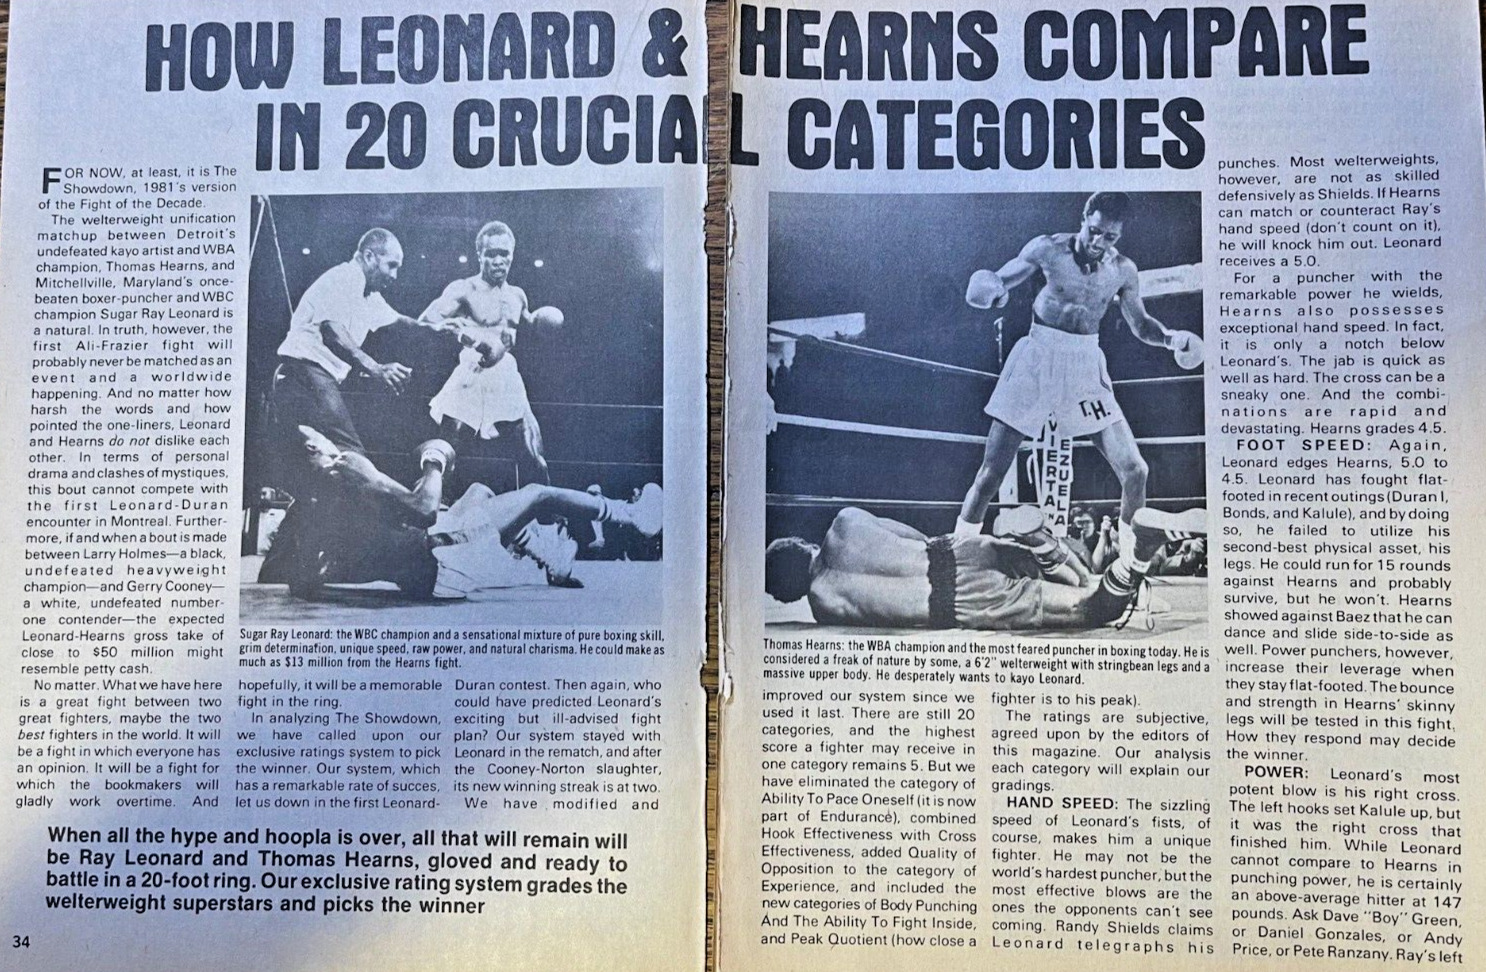 1981 Comparison of Boxers Sugar Ray Leonard & Thomas Hearns illustrated